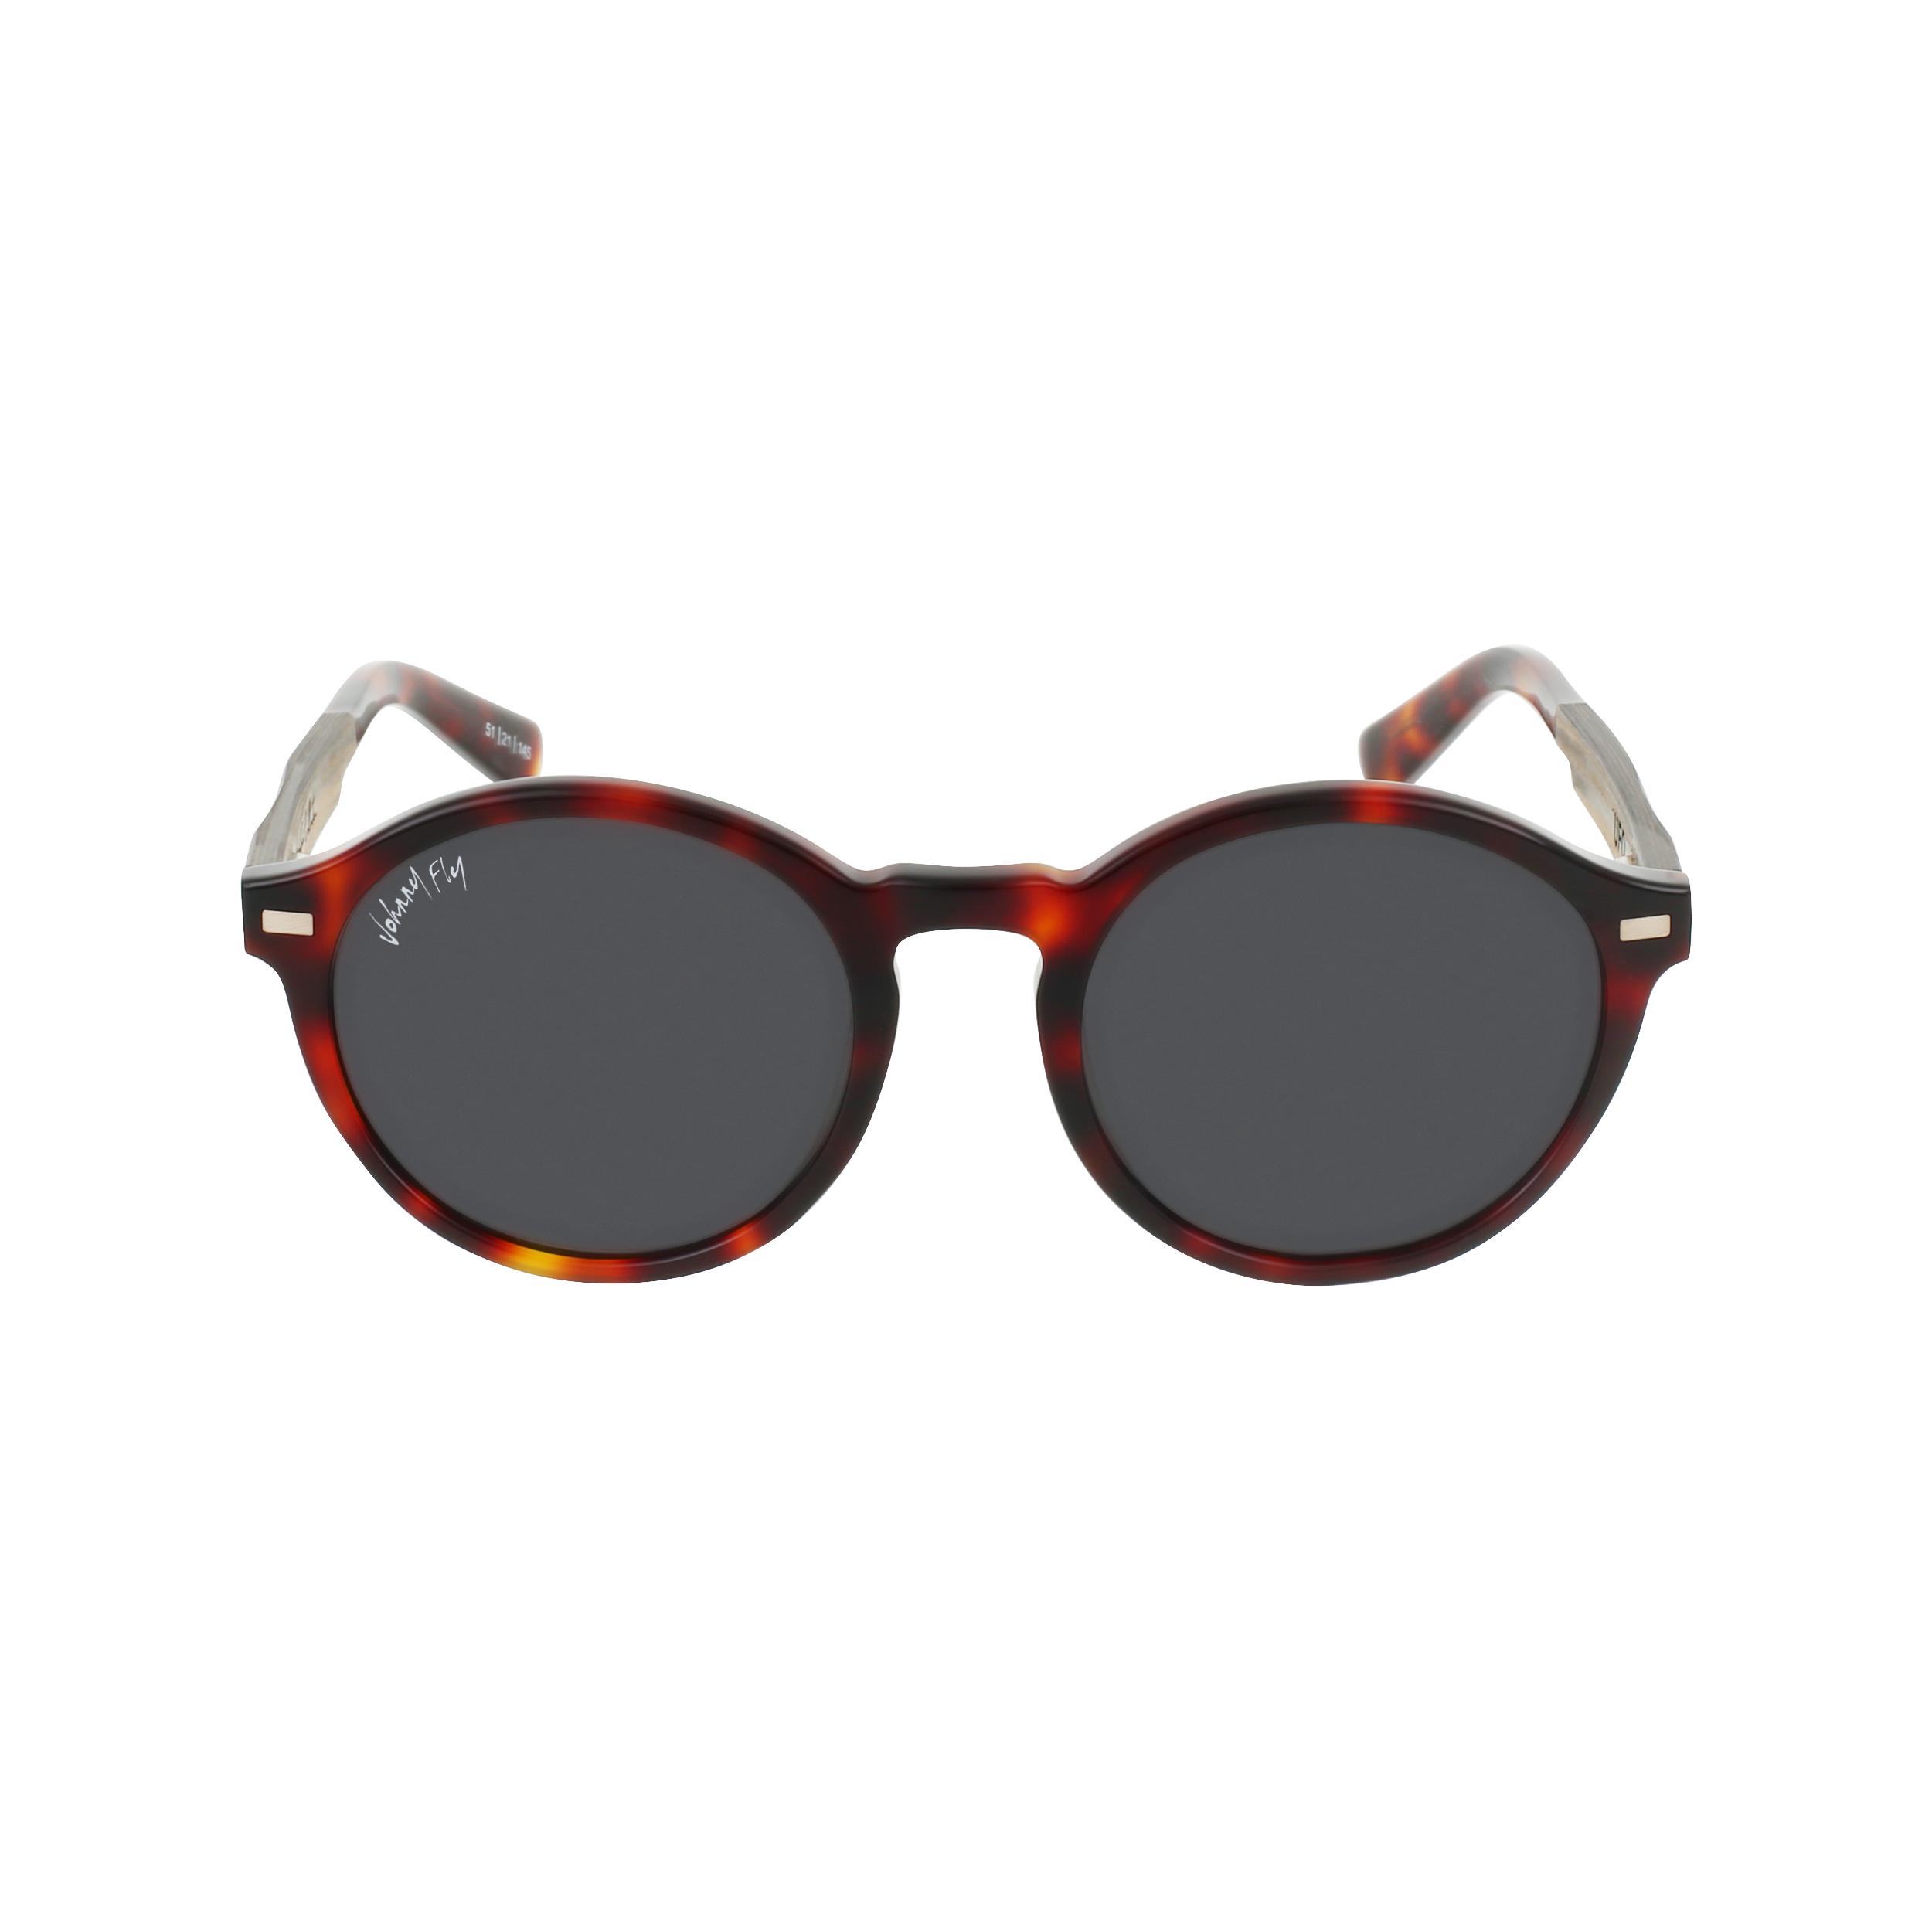 UFO Sunglasses Frame - Classic Tortoise- Johnny Fly | UFO-CTRT-S09-SMK | | 